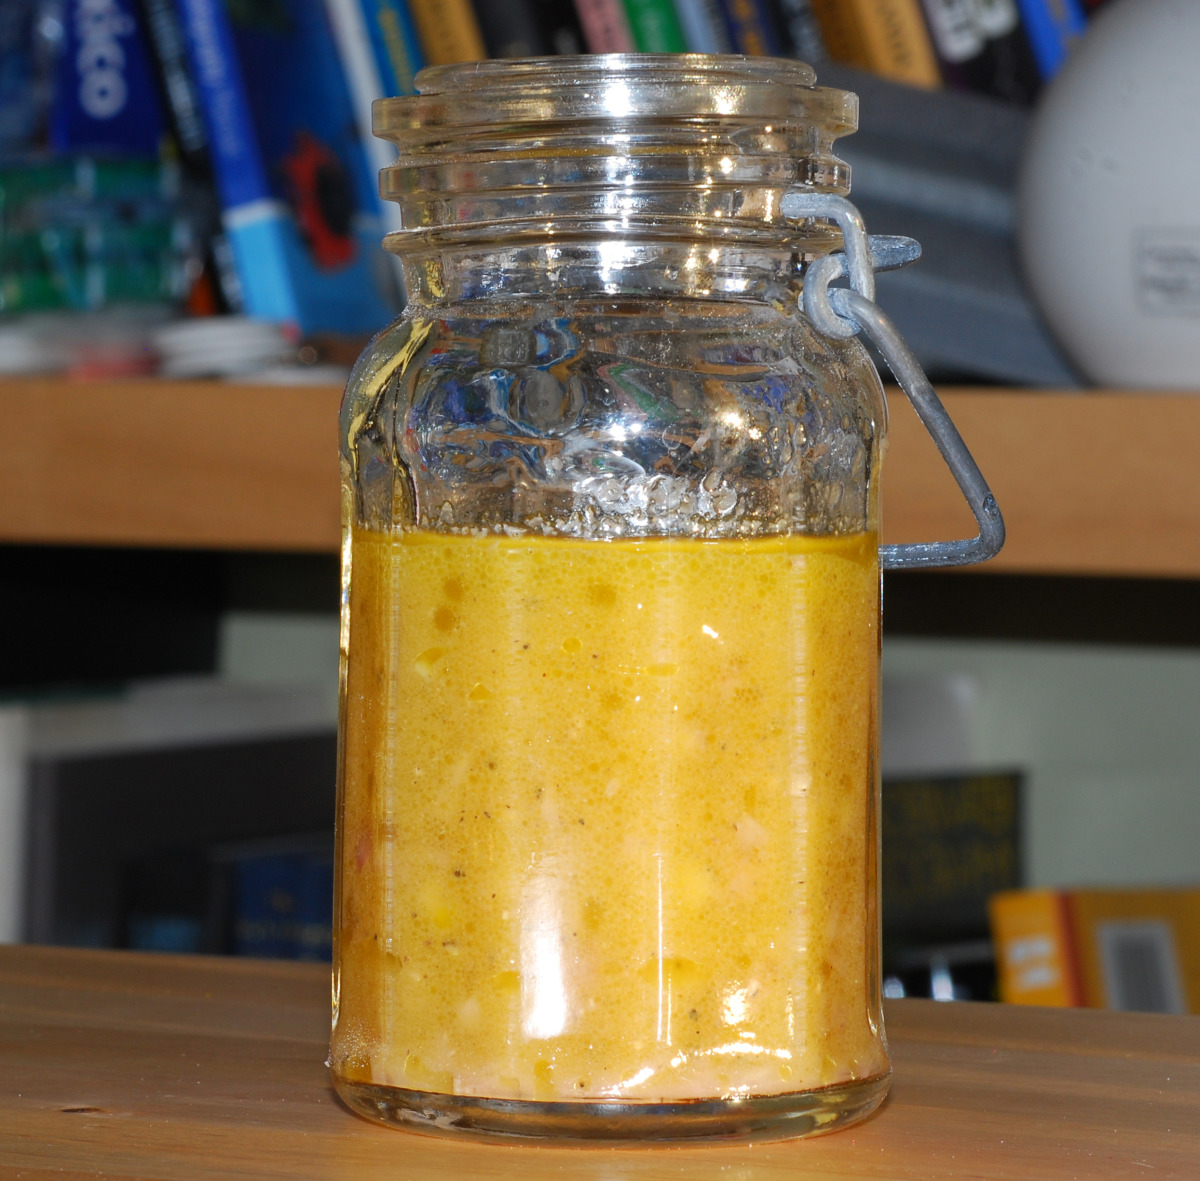 Basic Mustard-Shallot Vinaigrette Recipe